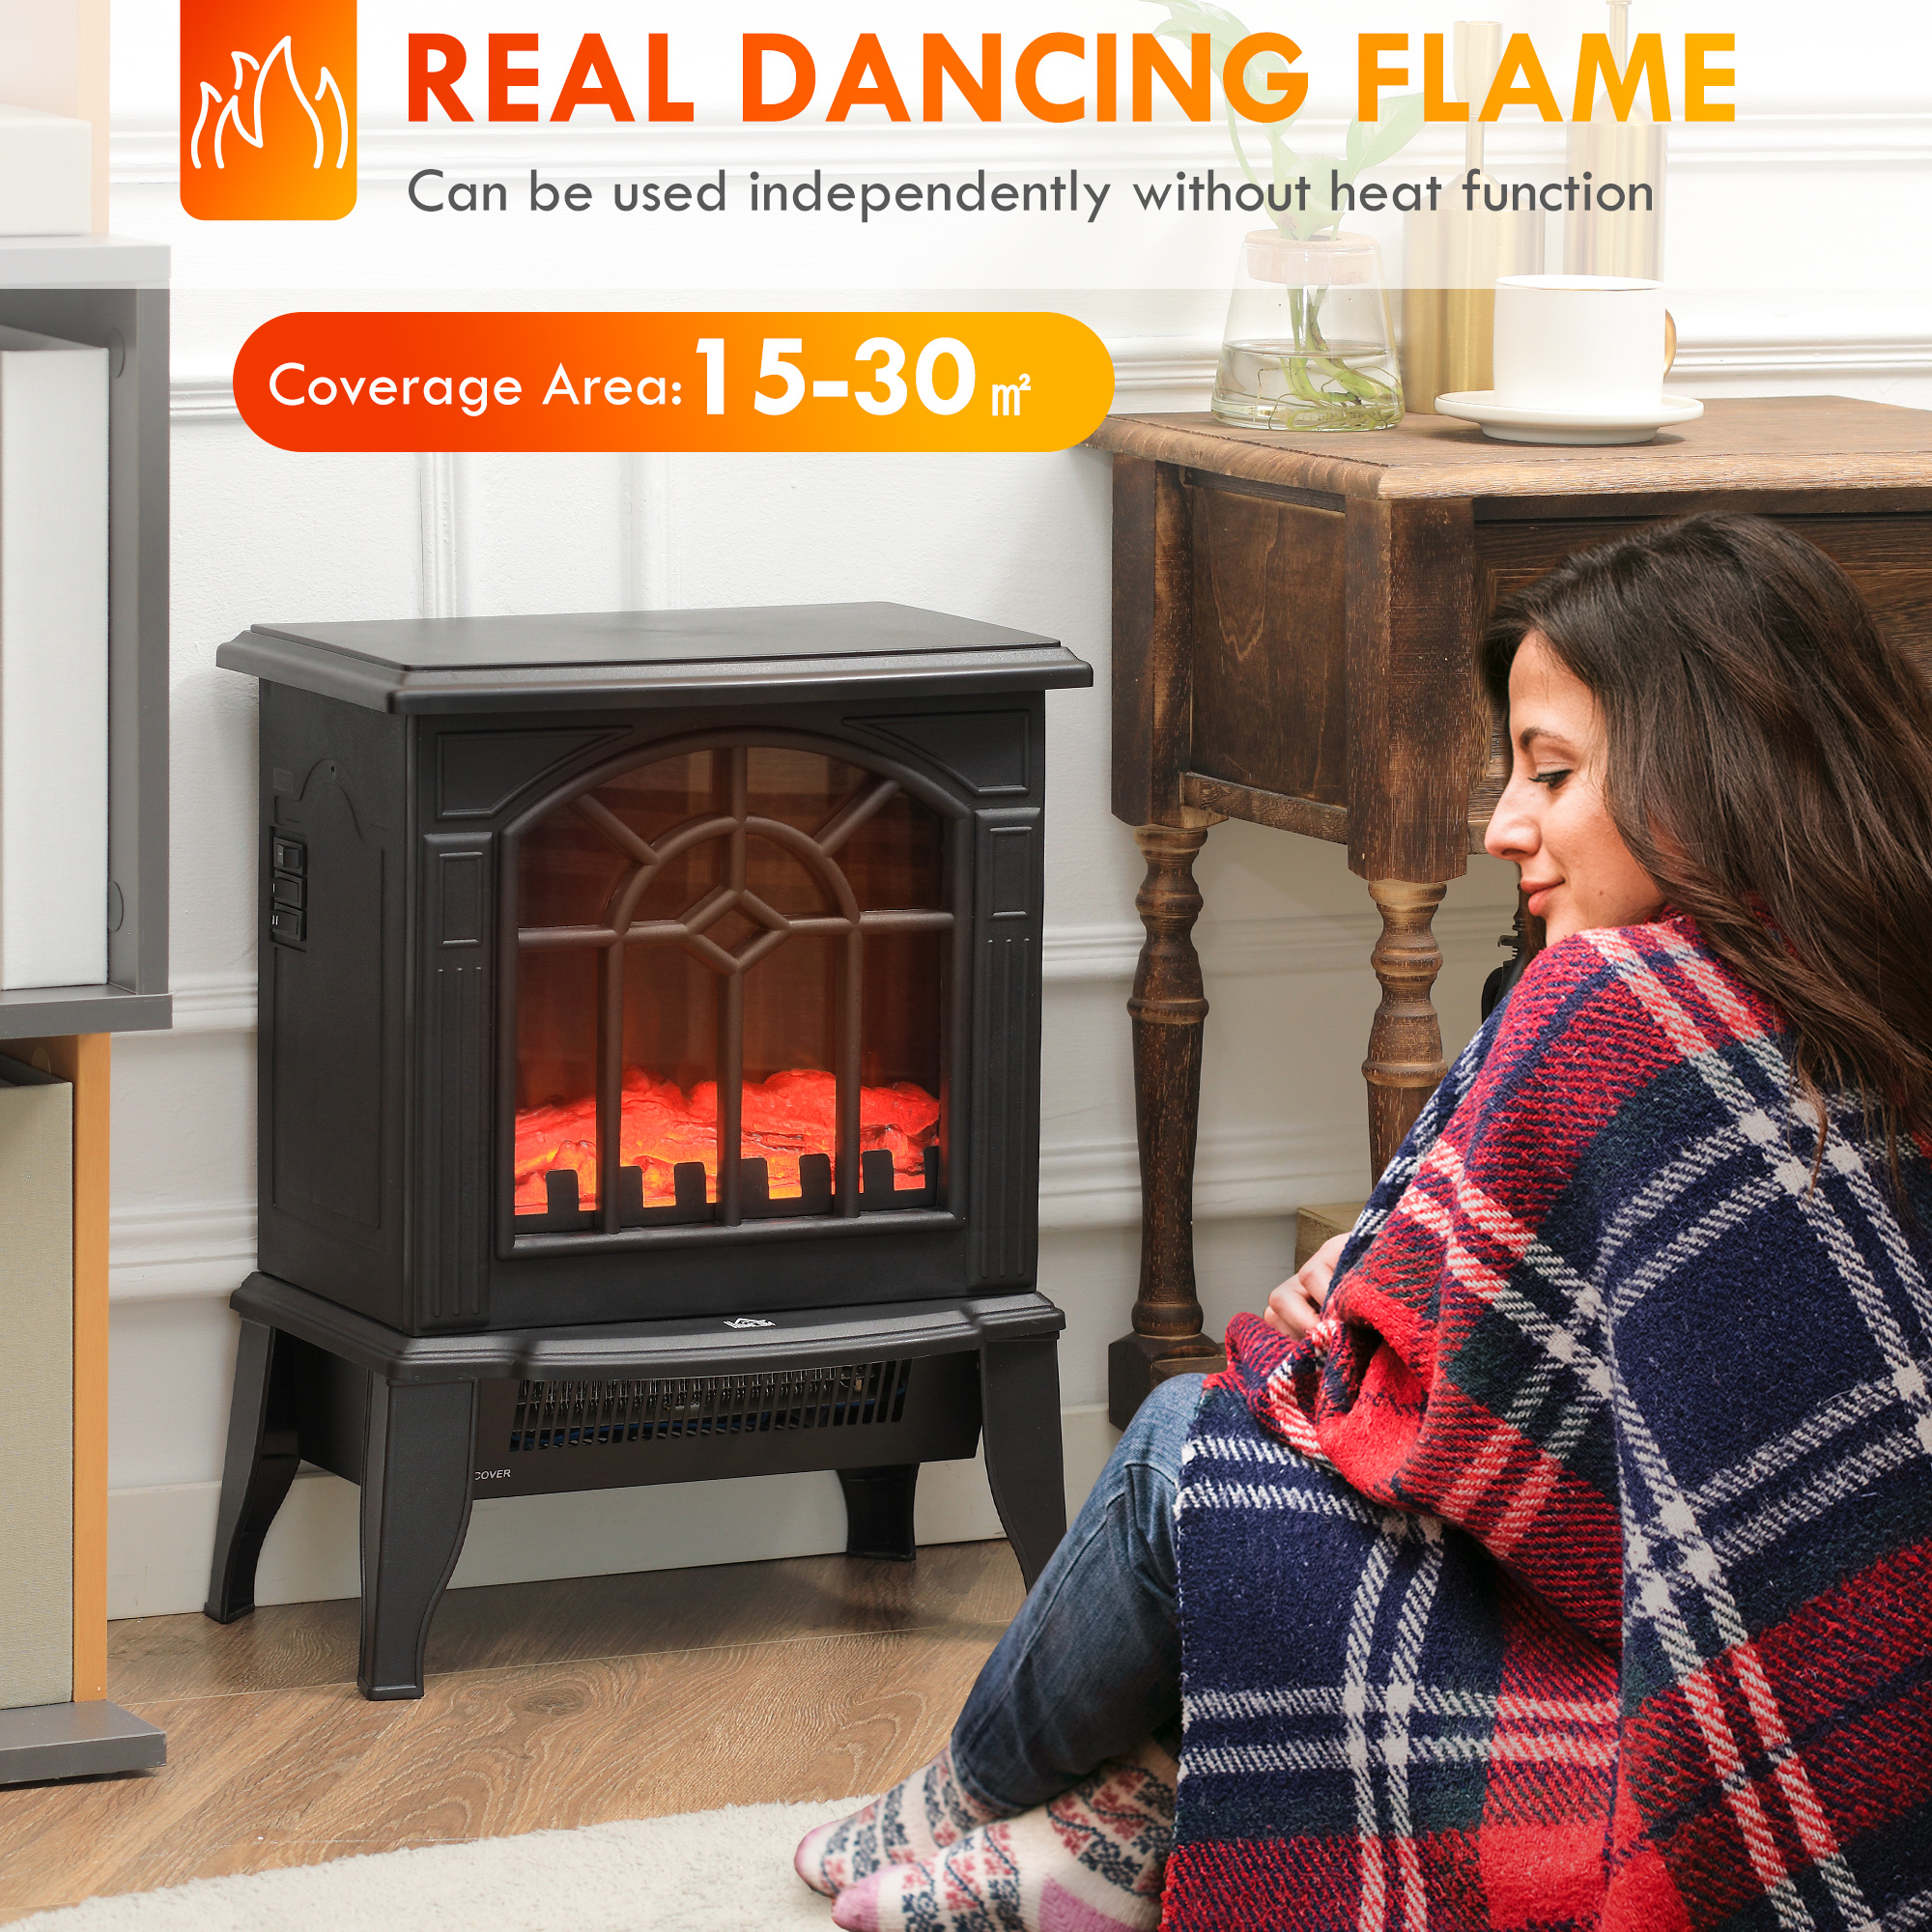 HomCom 16 in x 14.5 in 1500W Freestanding Indoor Electric Fireplace Heater, 9.3 lb - image 4 of 9